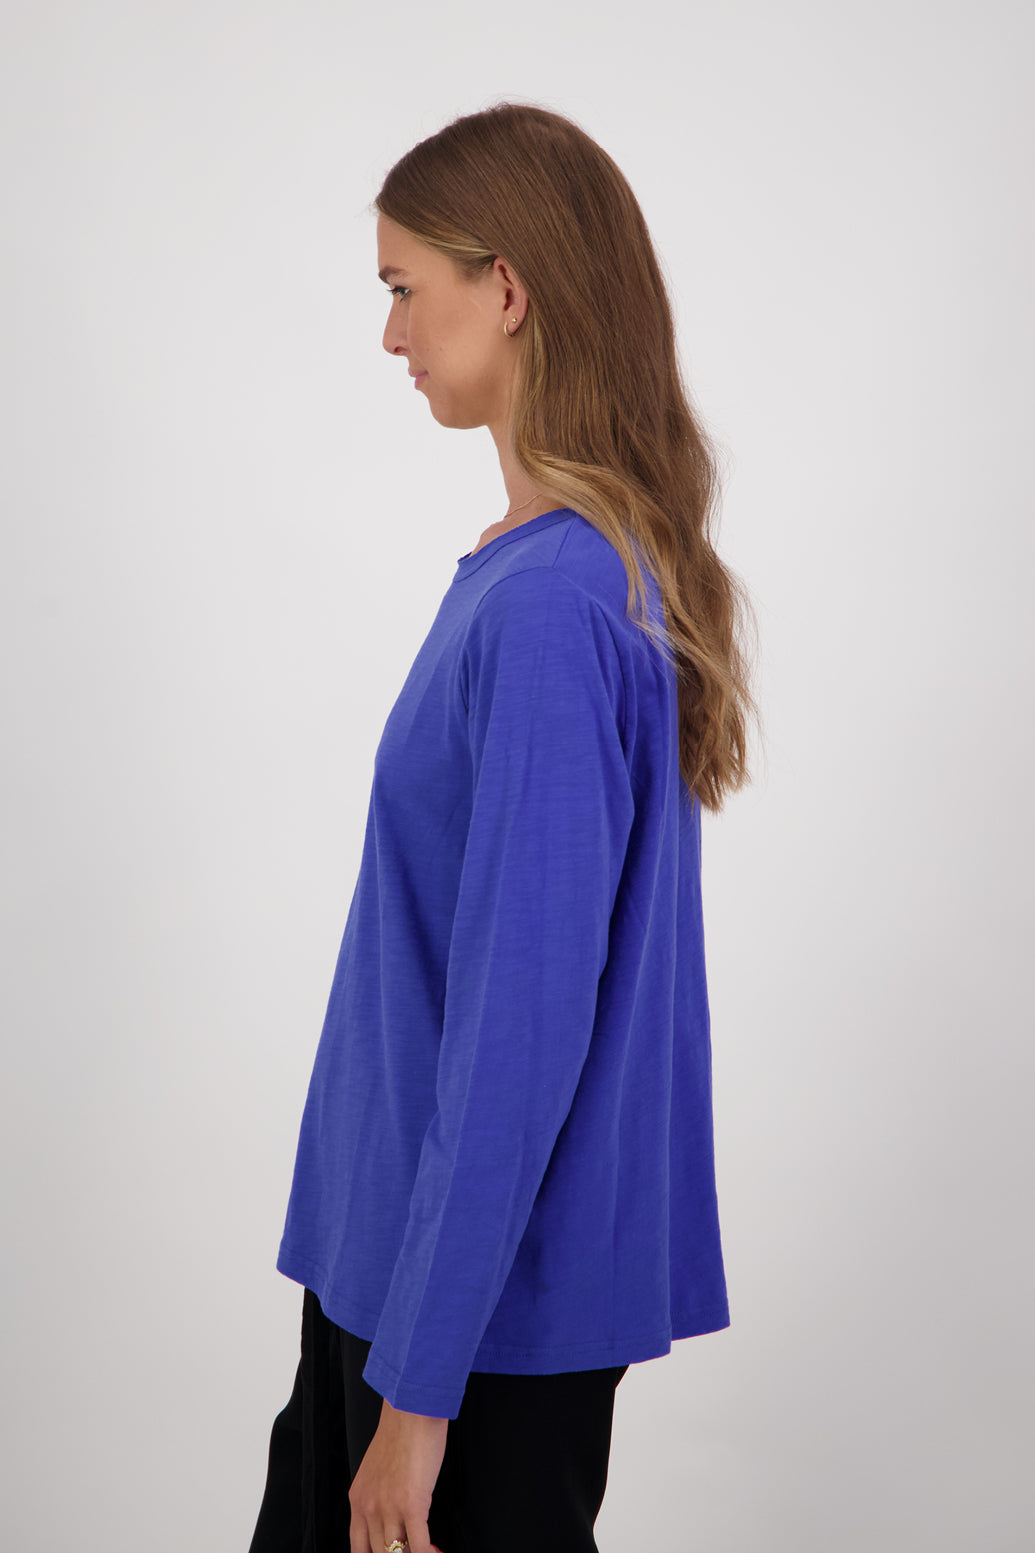 Maki Cotton Long Sleeve T-Shirt - Royal Blue